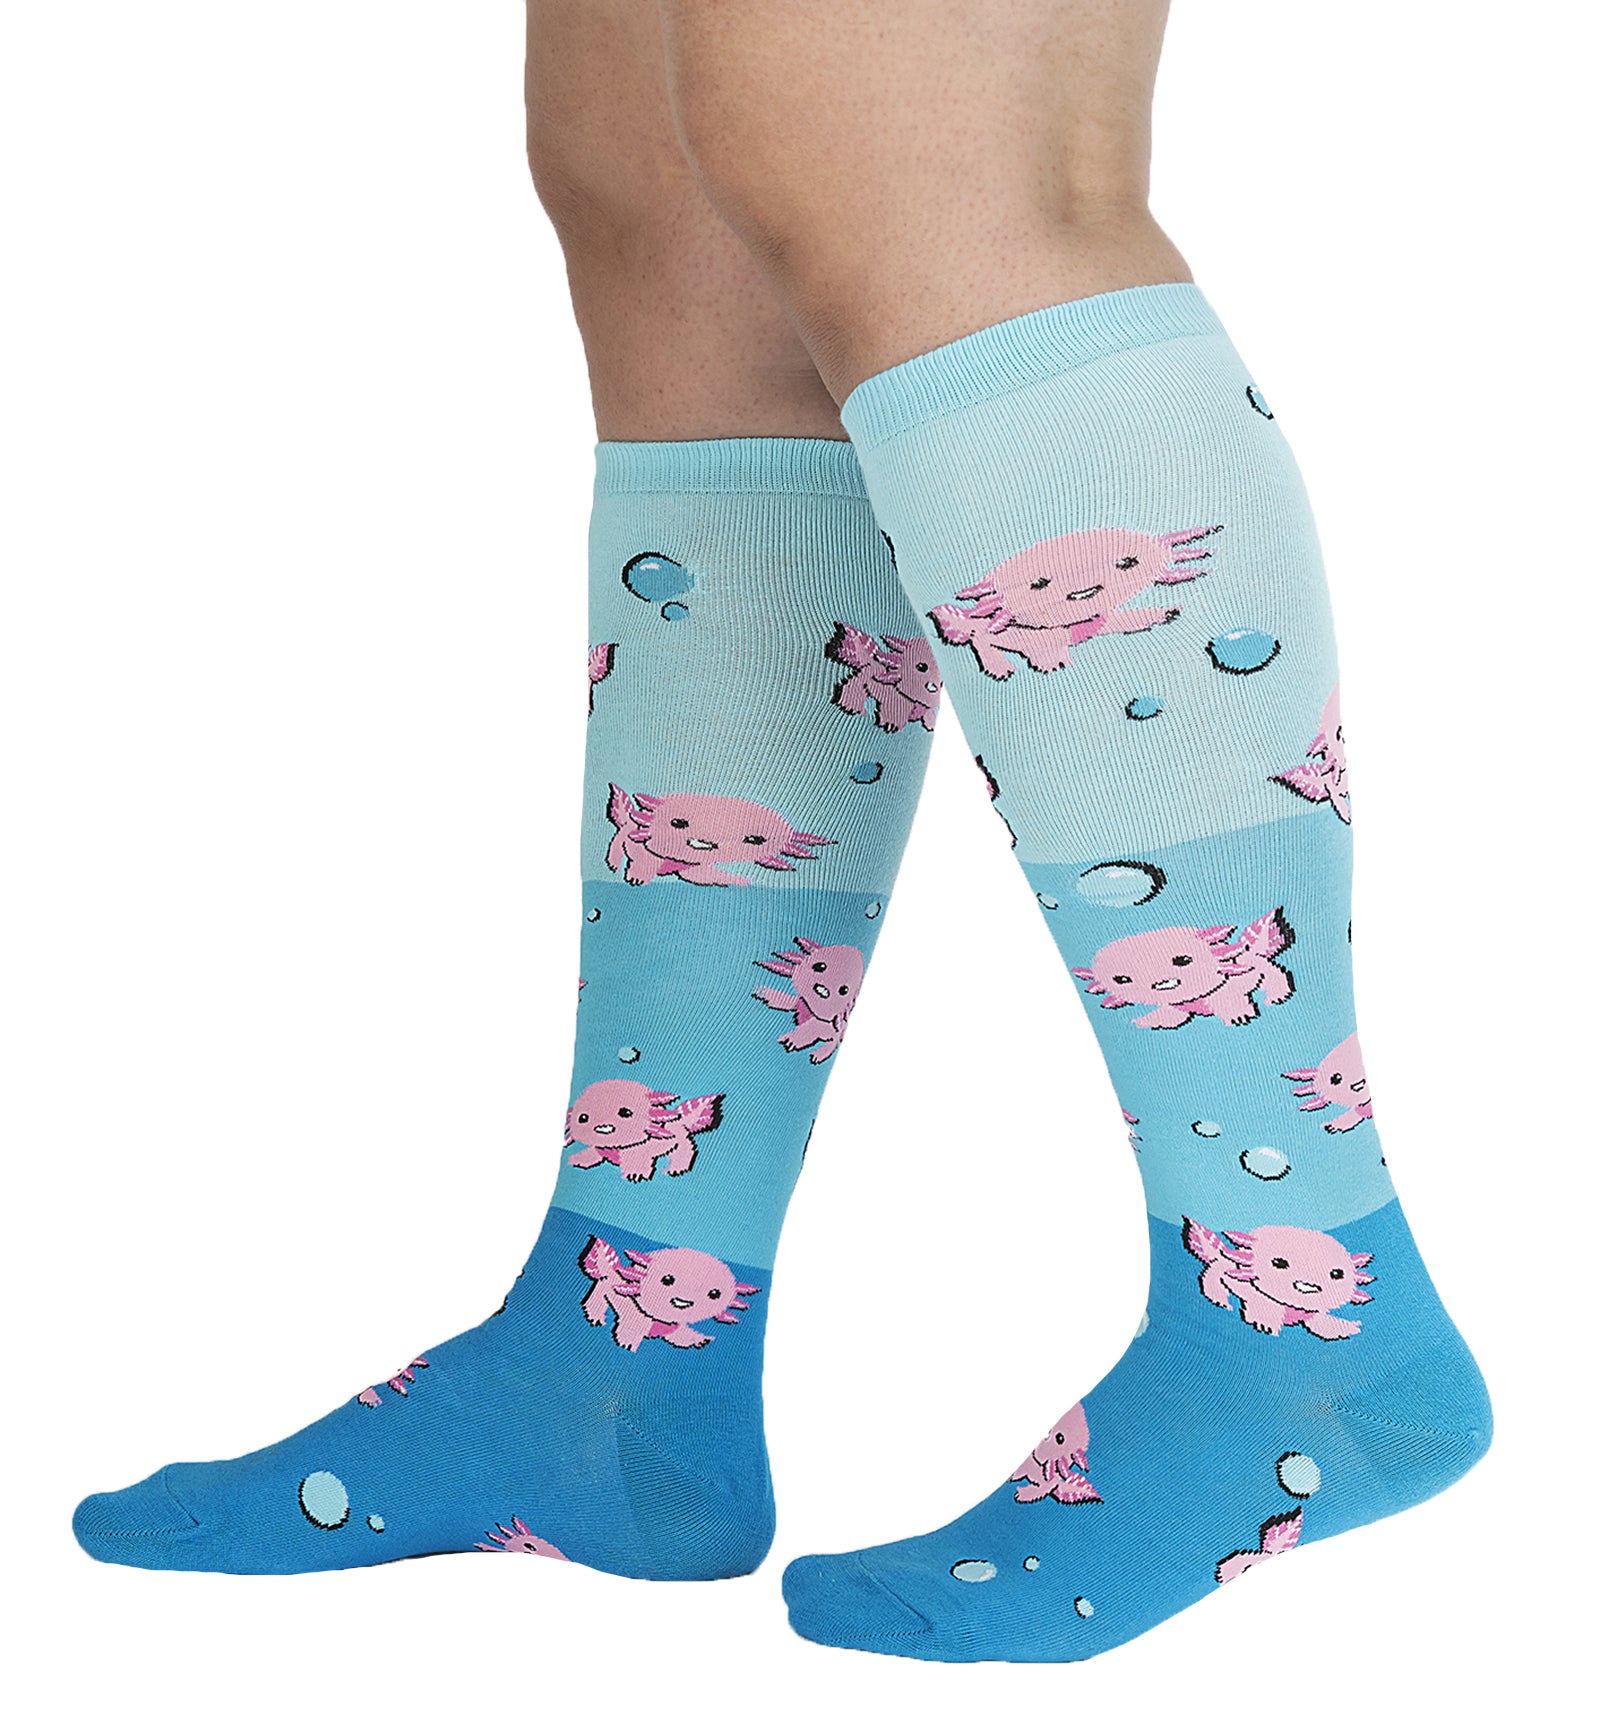 SOCK it to me Unisex Knee High Socks (F0554),Dancing Axolotl - Dancing Axolotl,One Size